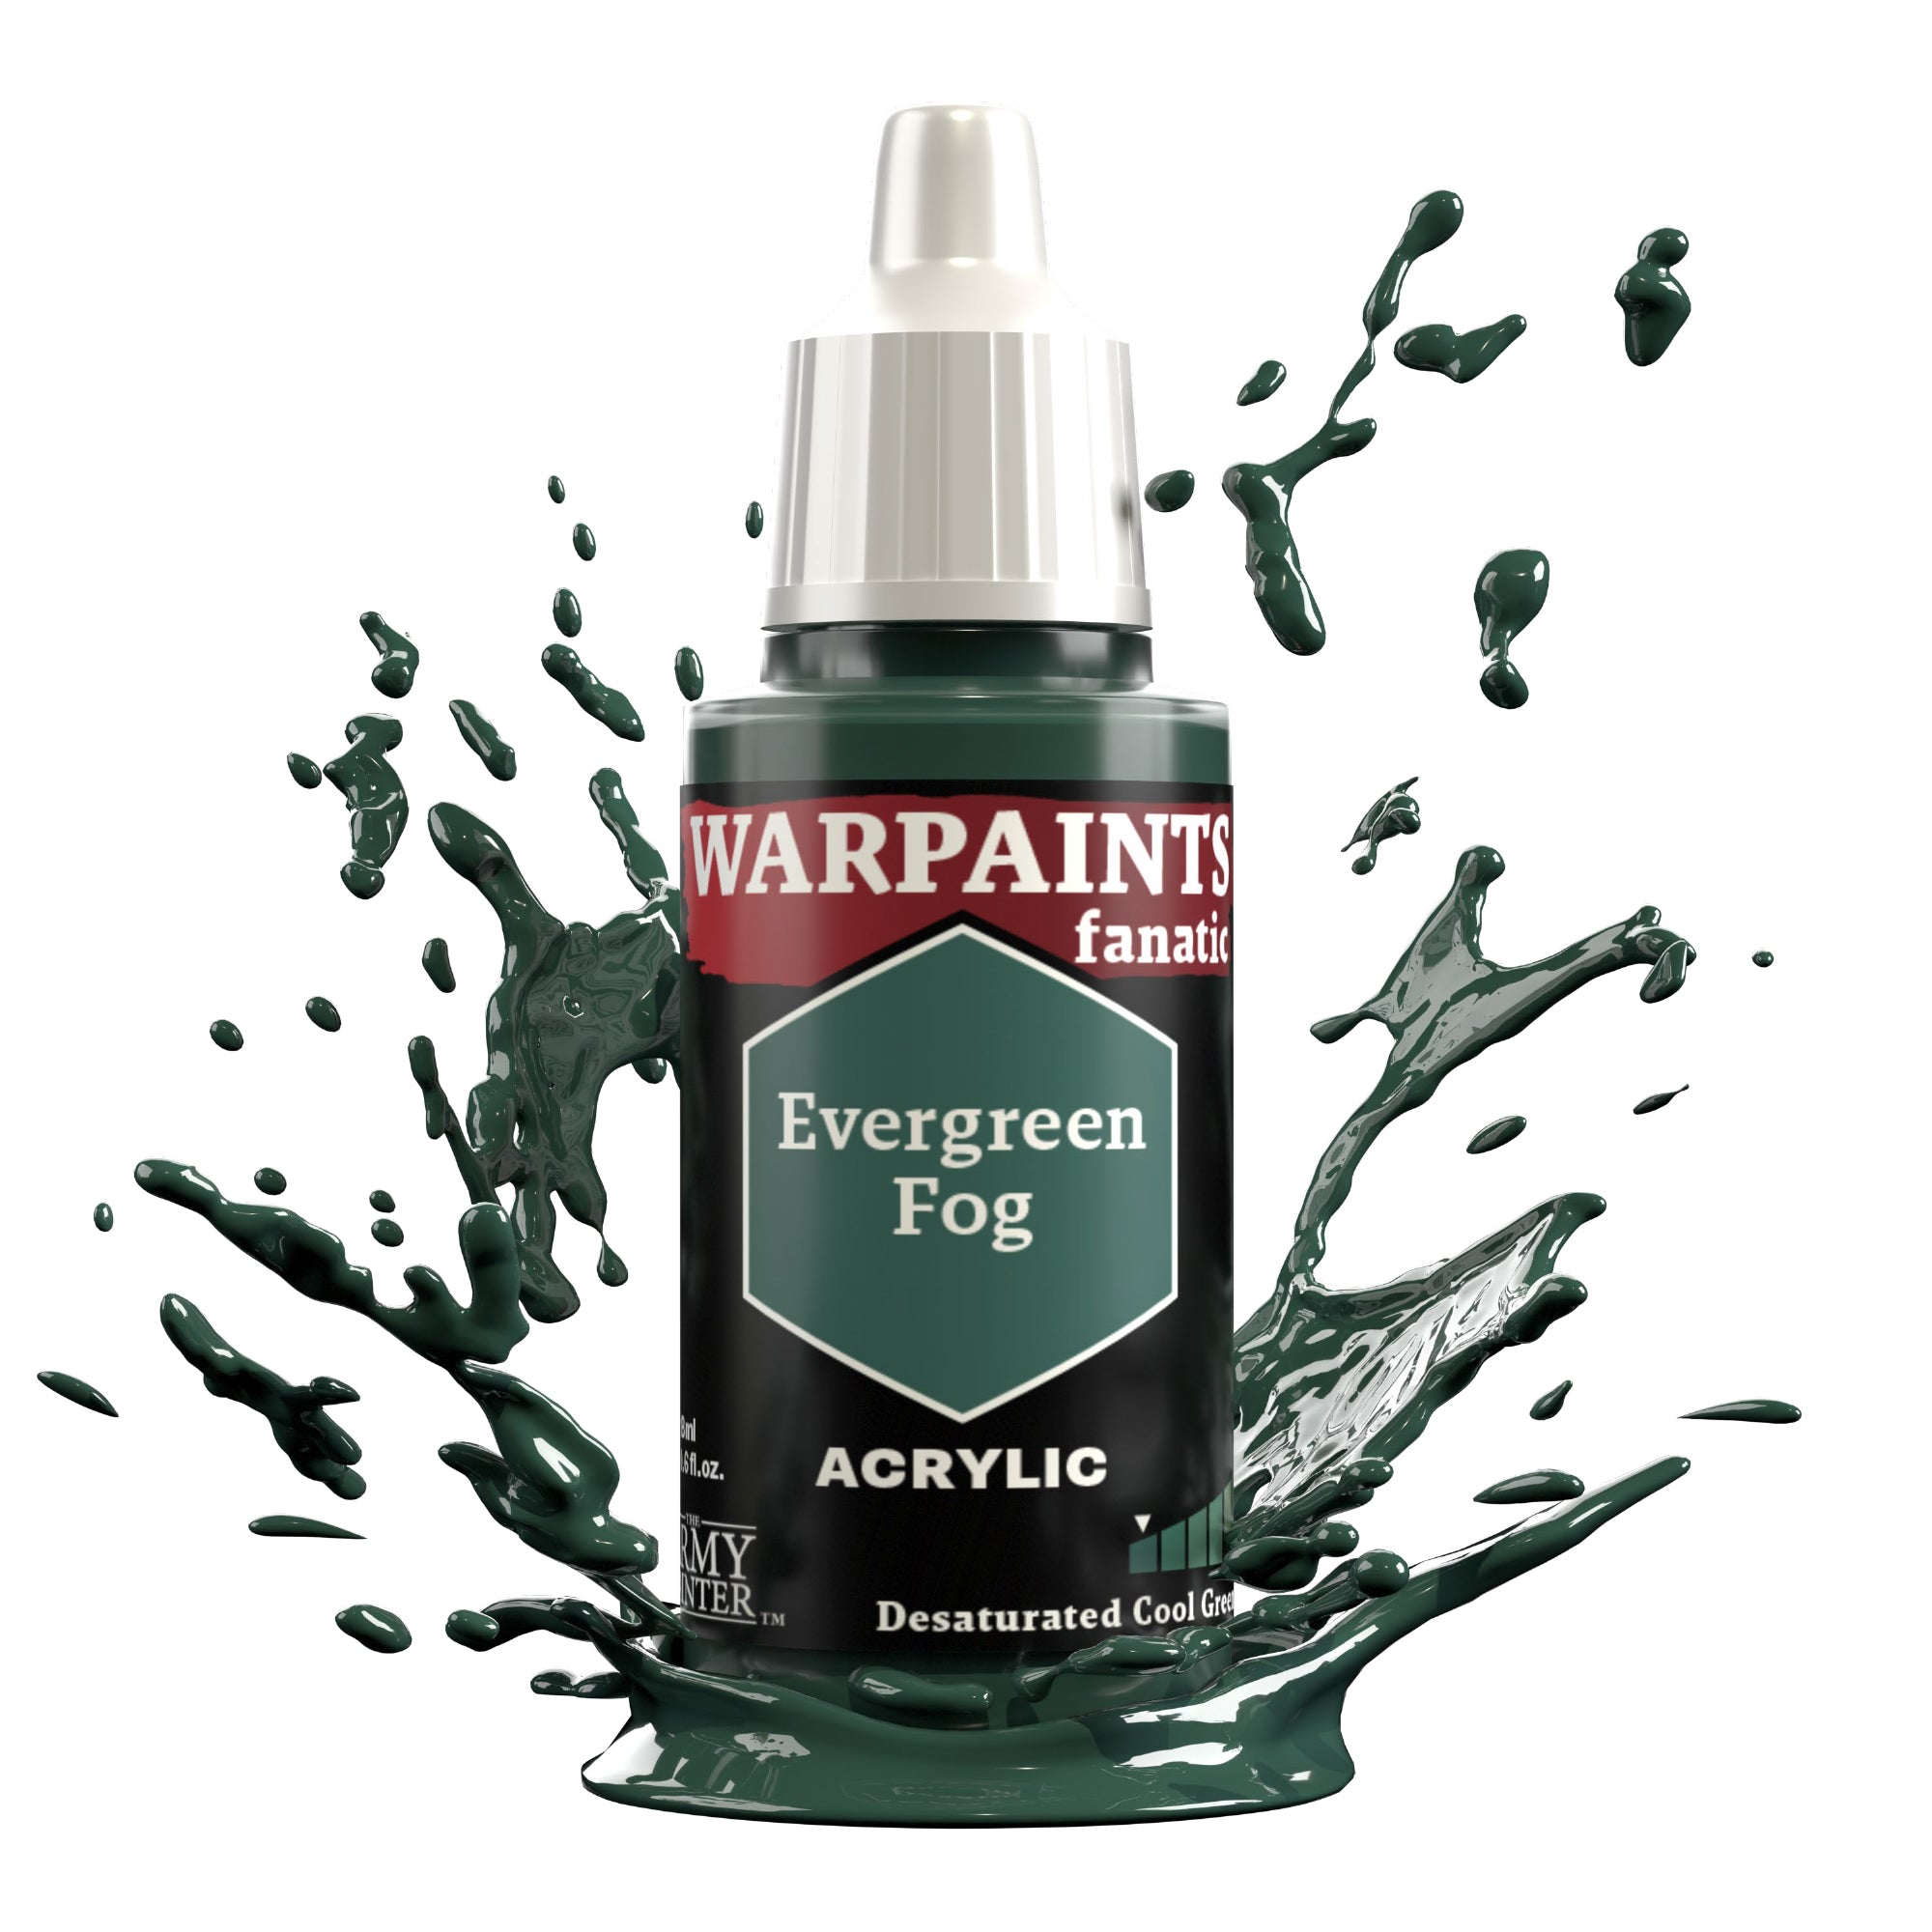 Warpaint Fanatics: Evergreen Fog